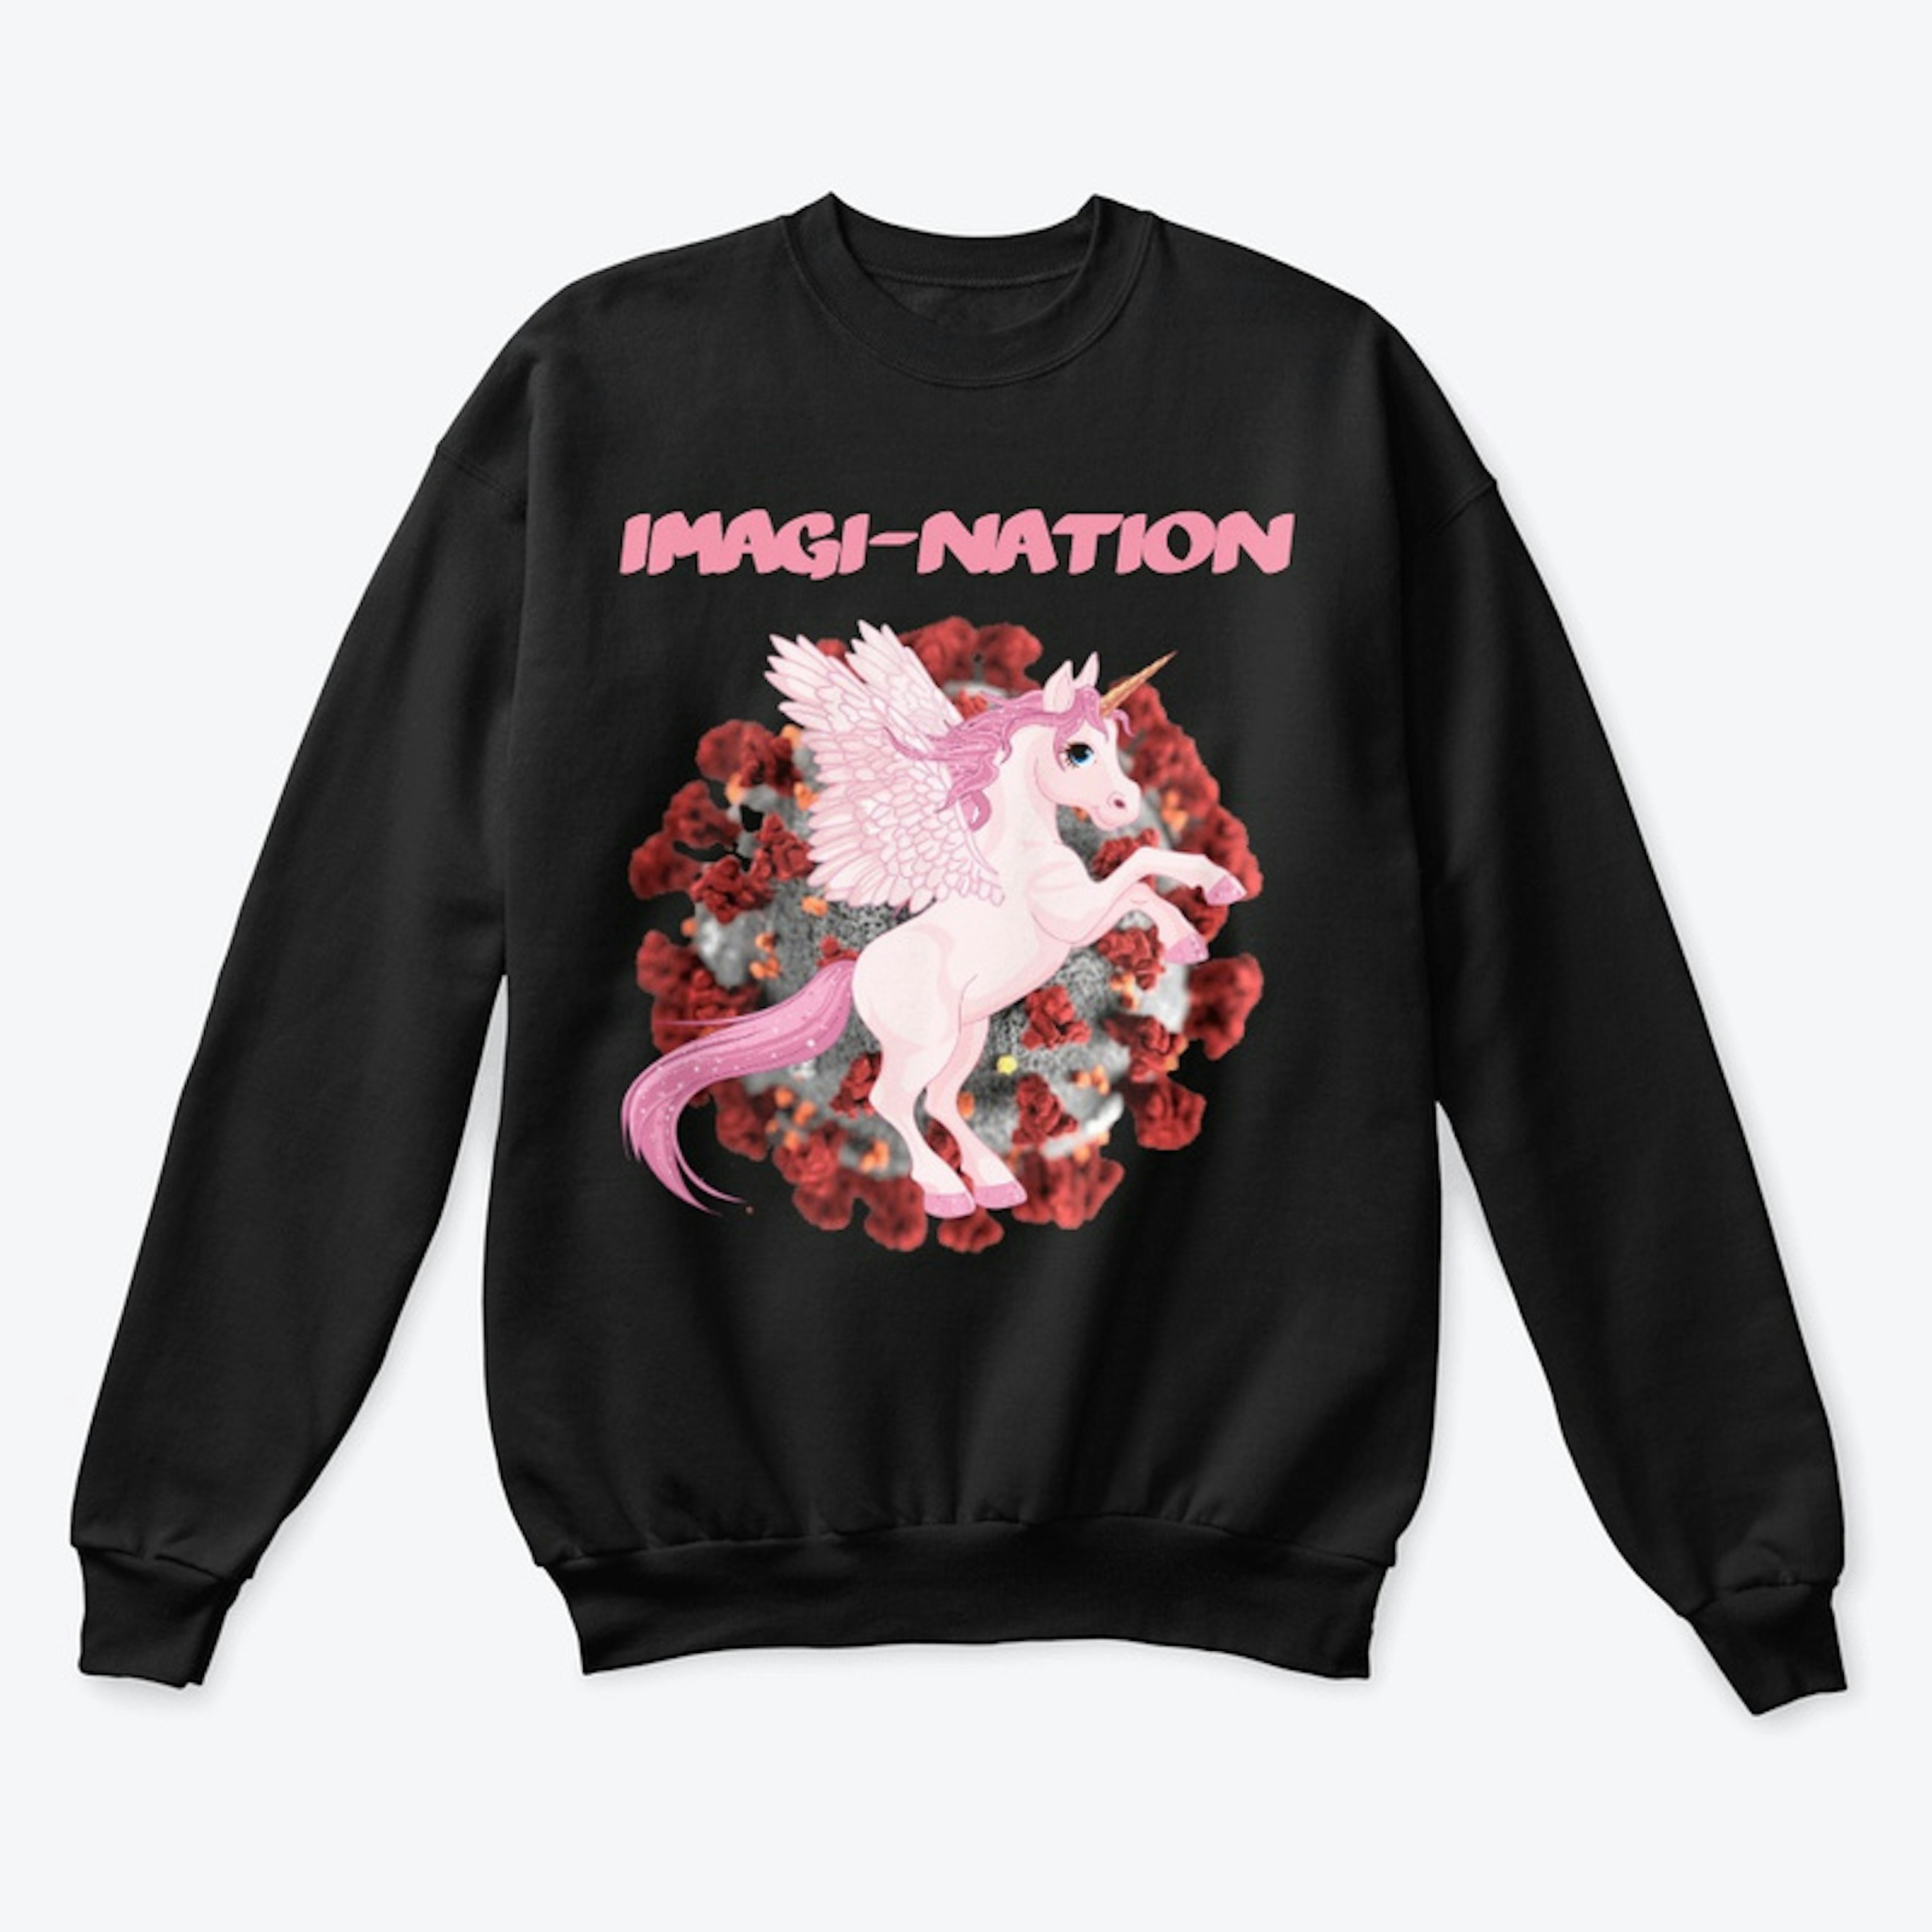 Imagi-nation 